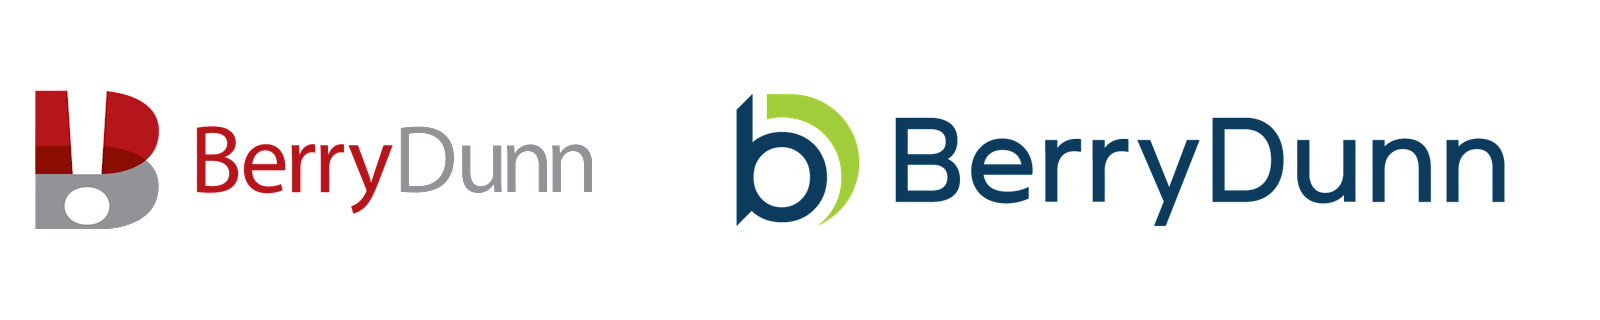 BerryDunn Logos